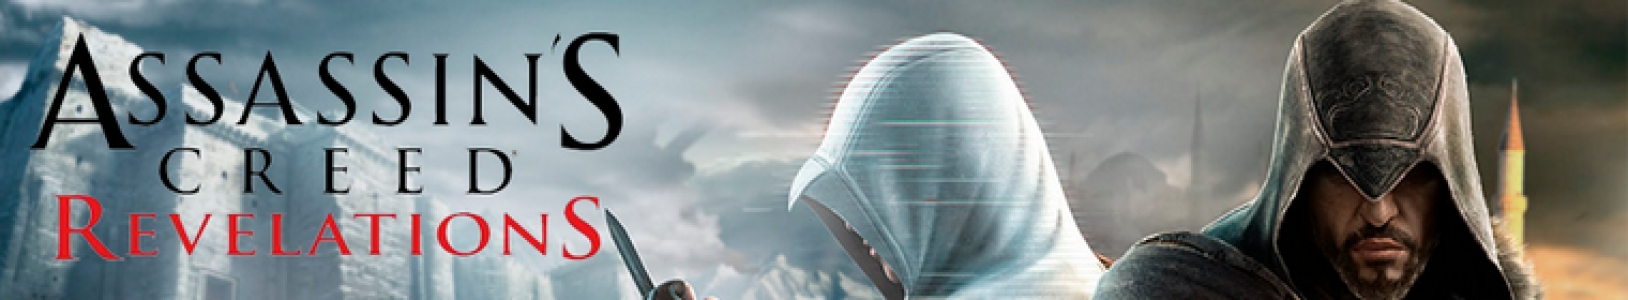 Assassin's Creed: Revelations banner